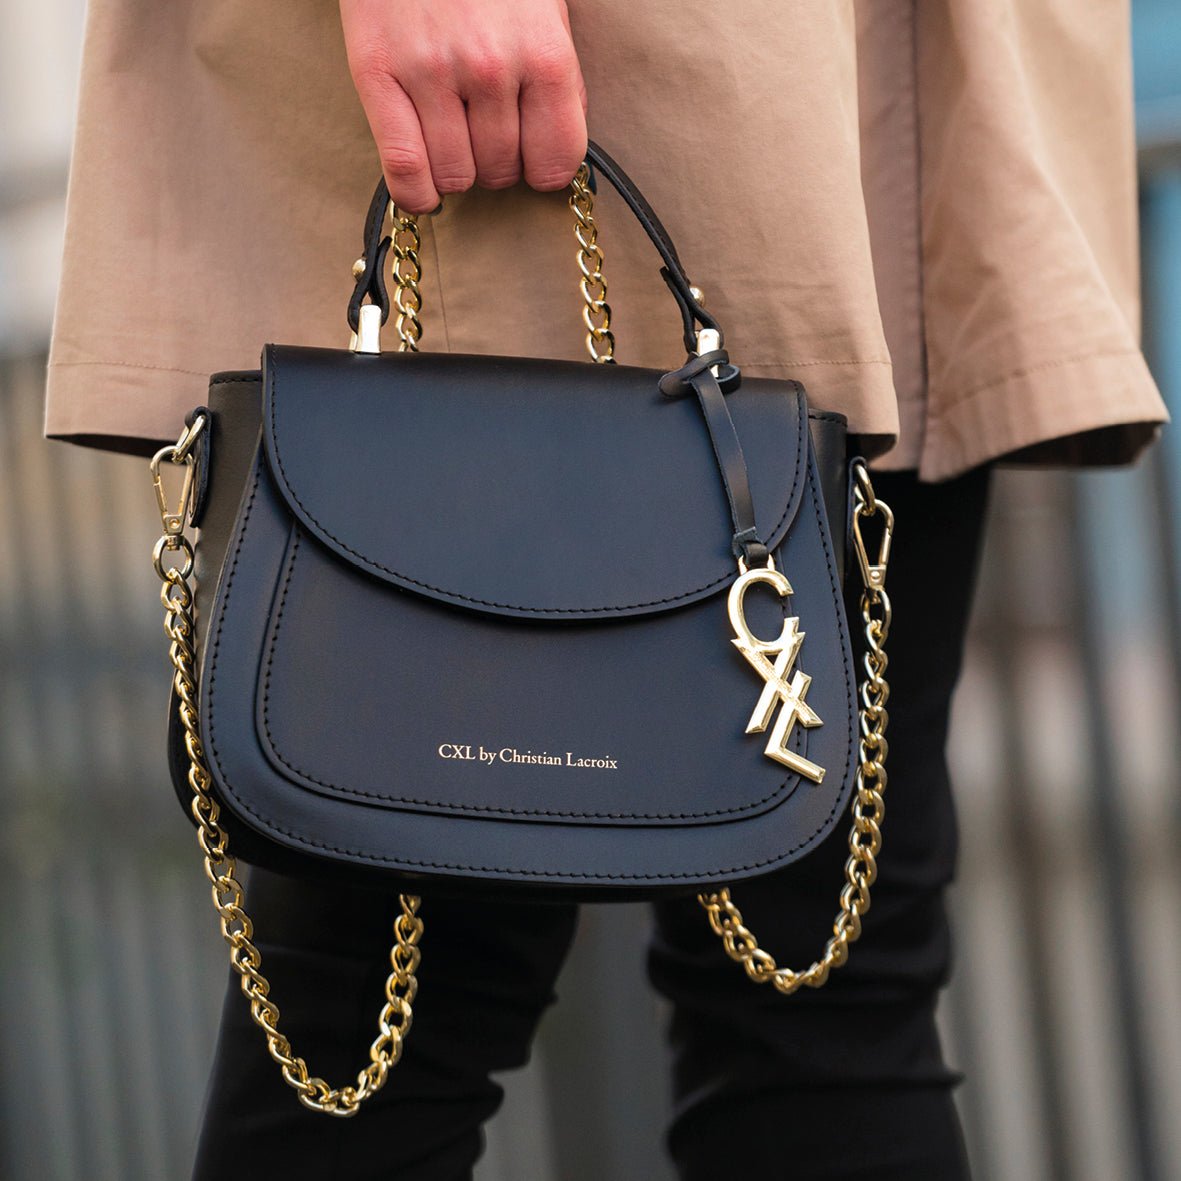 Small leather handbag - Haussmann 